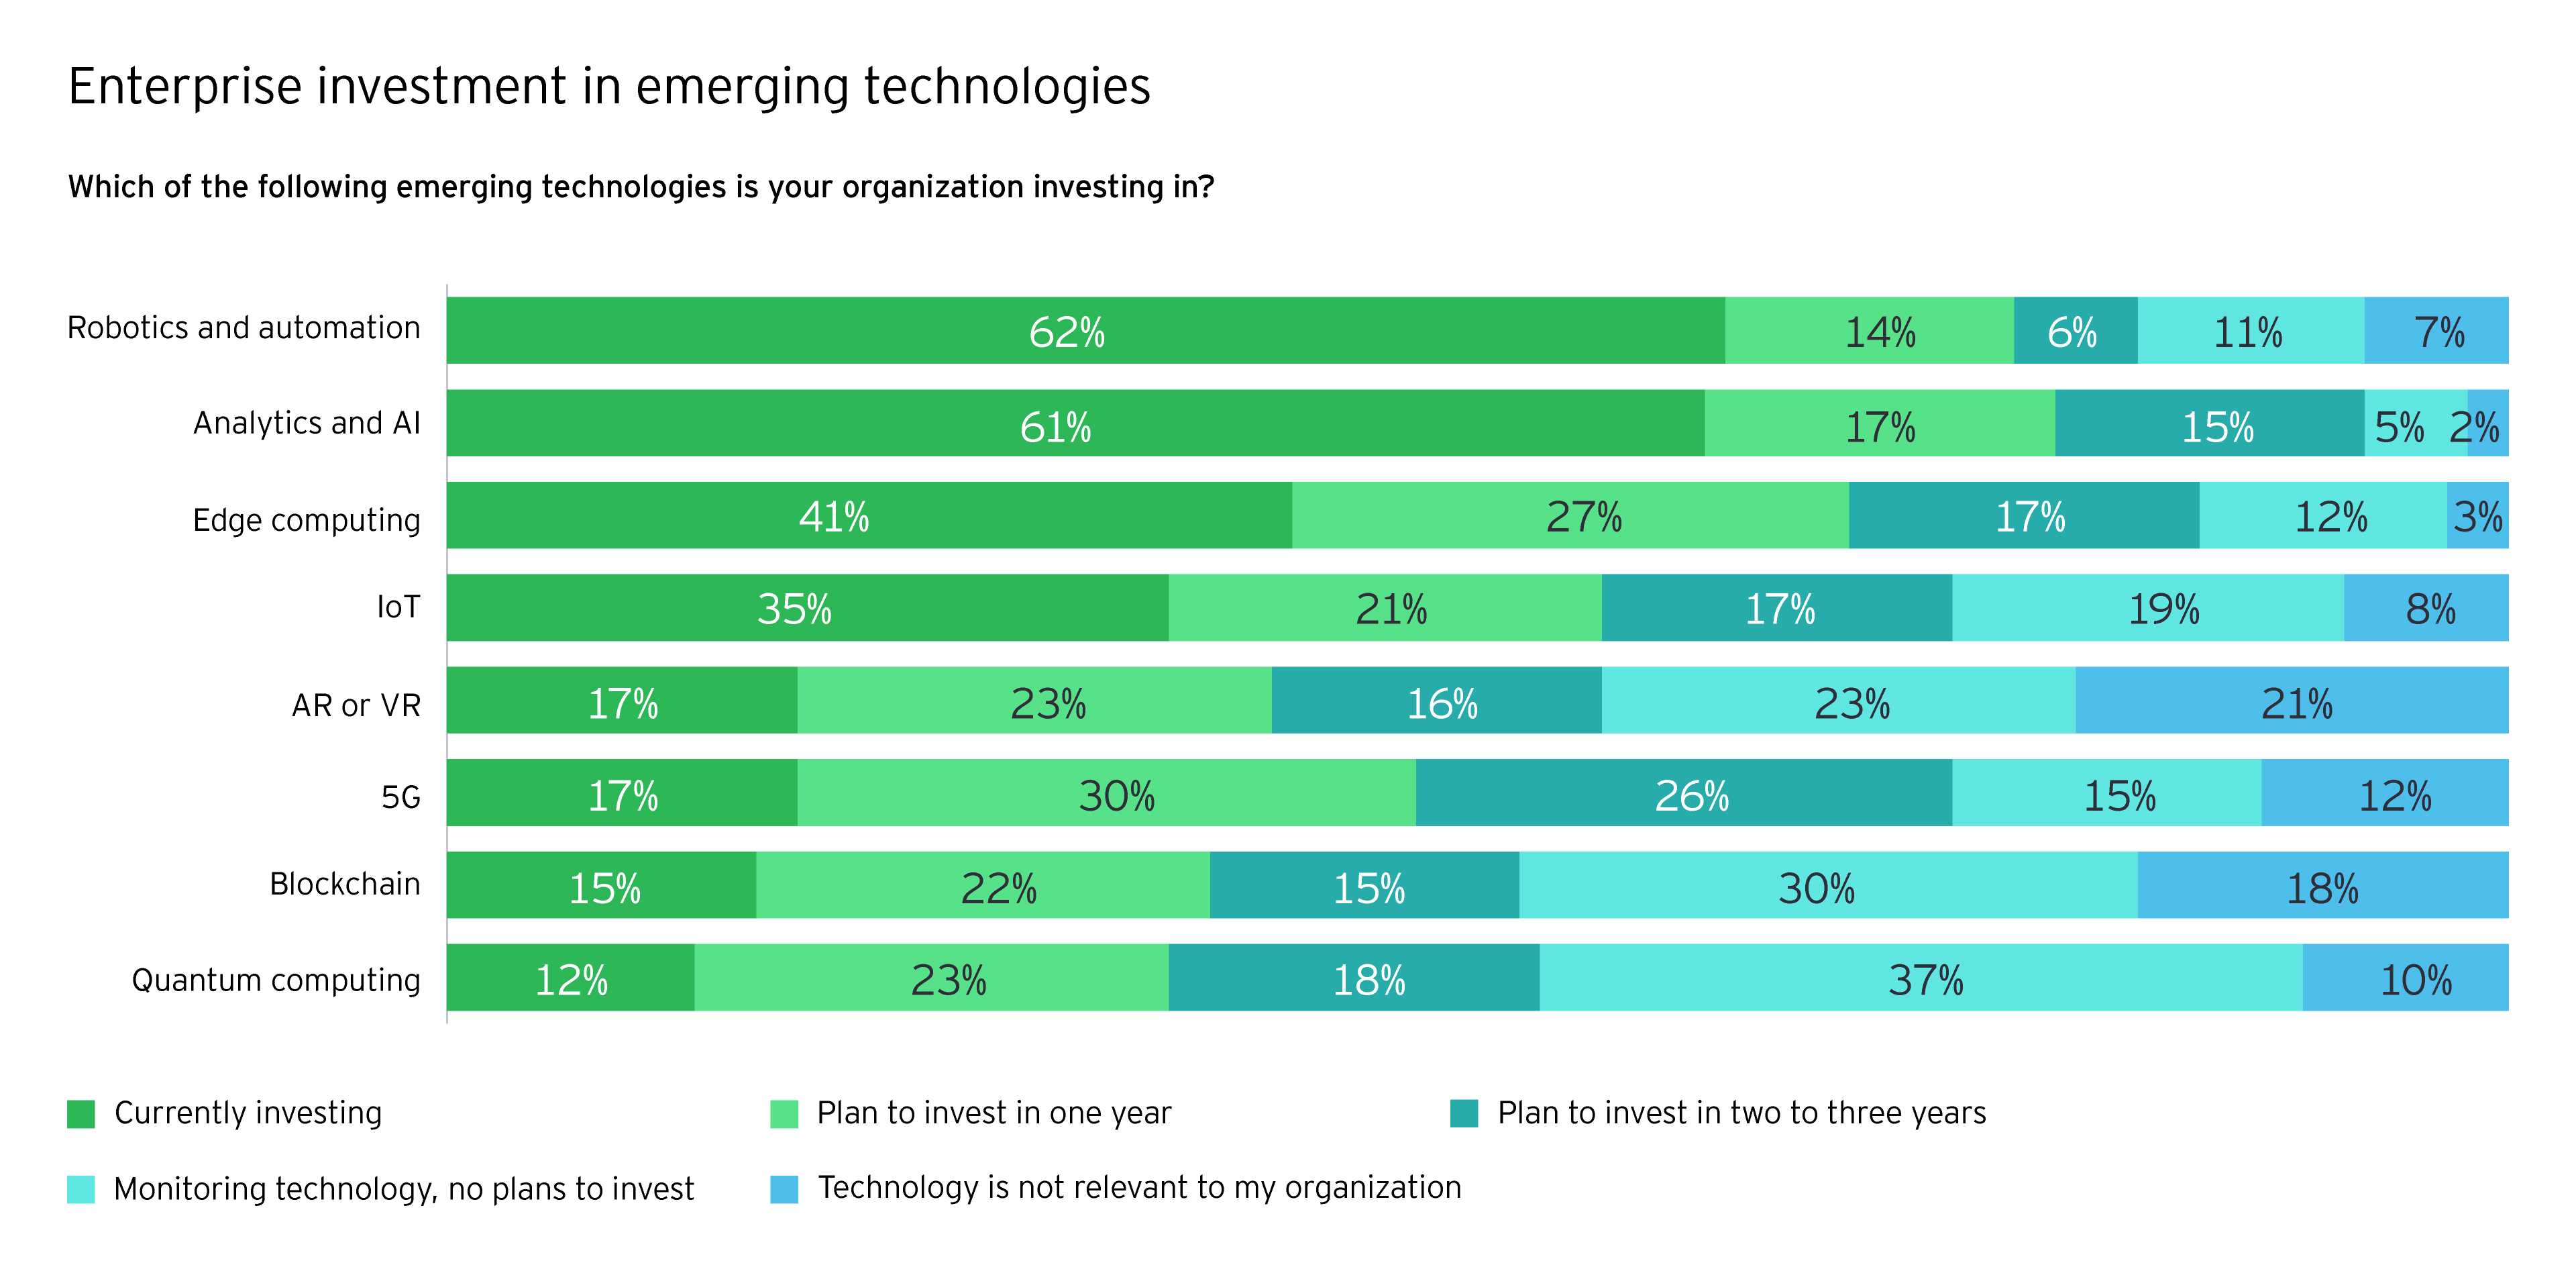 Enterprise investment in emerging technologies